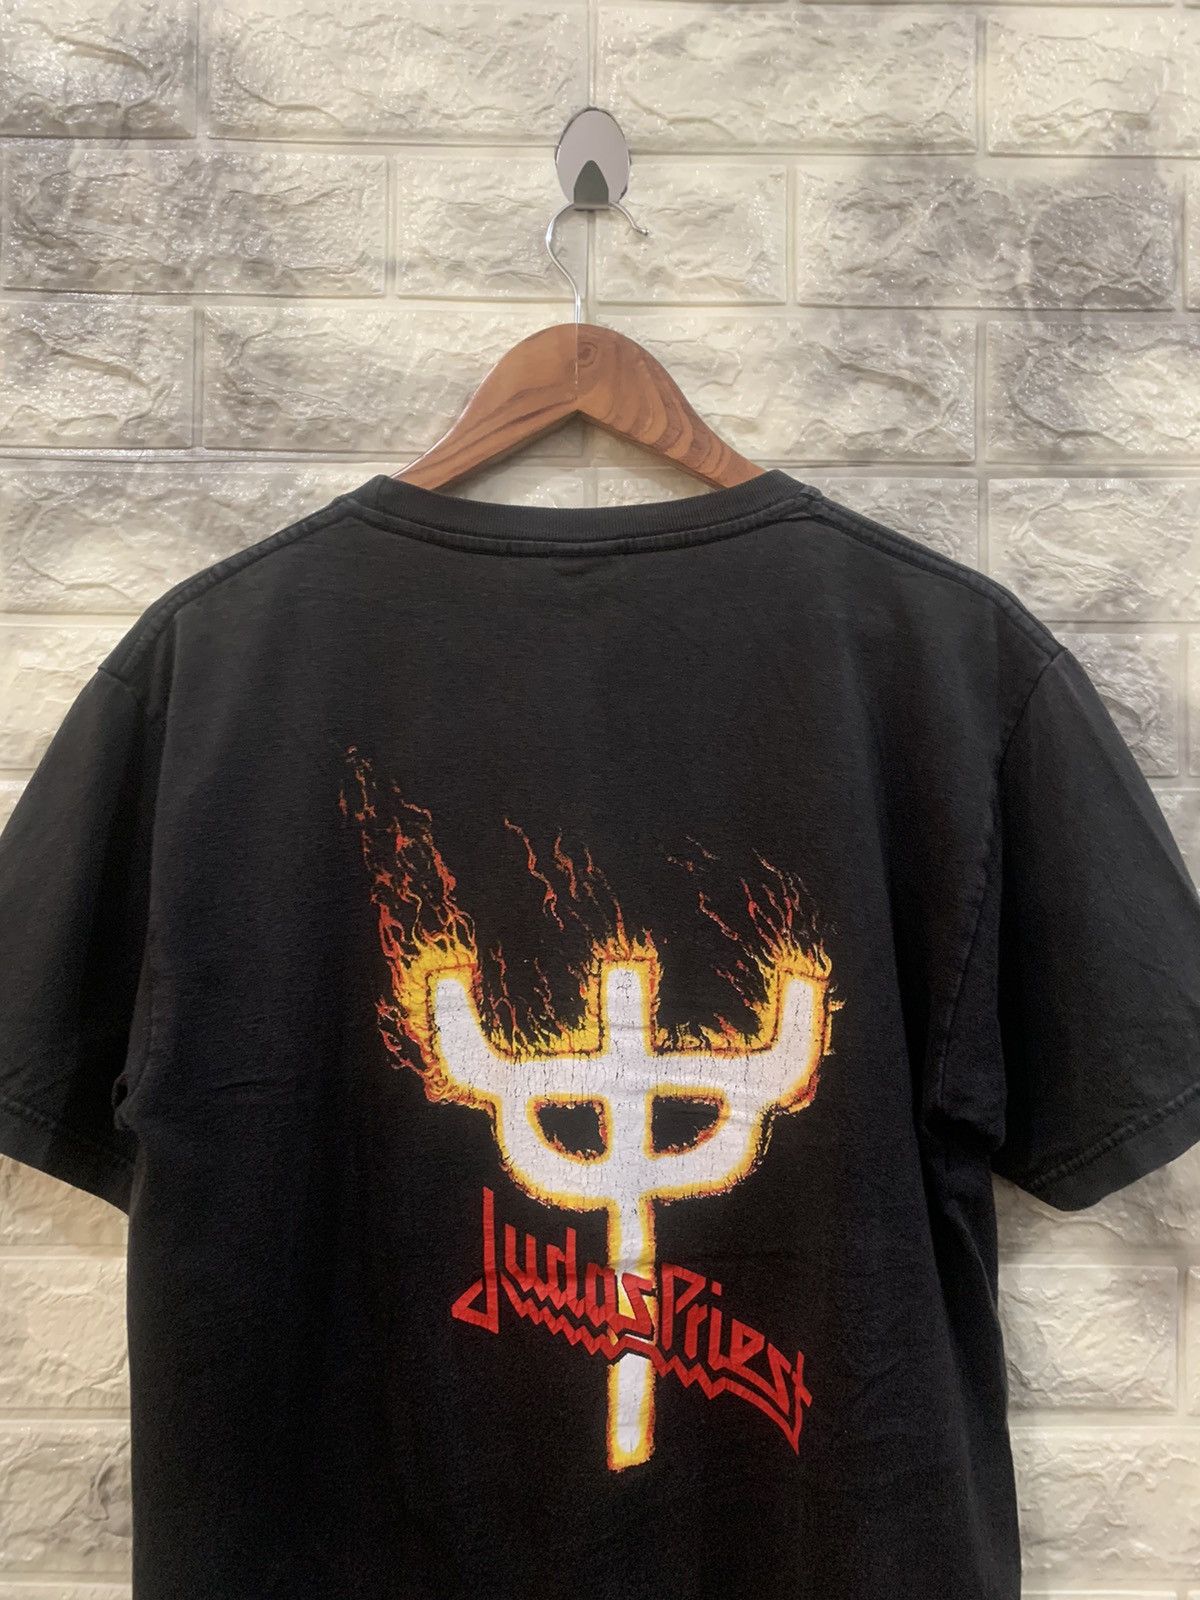 Vintage Vintage Judas priest band rock t-shirt Size US M / EU 48-50 / 2 - 8 Thumbnail